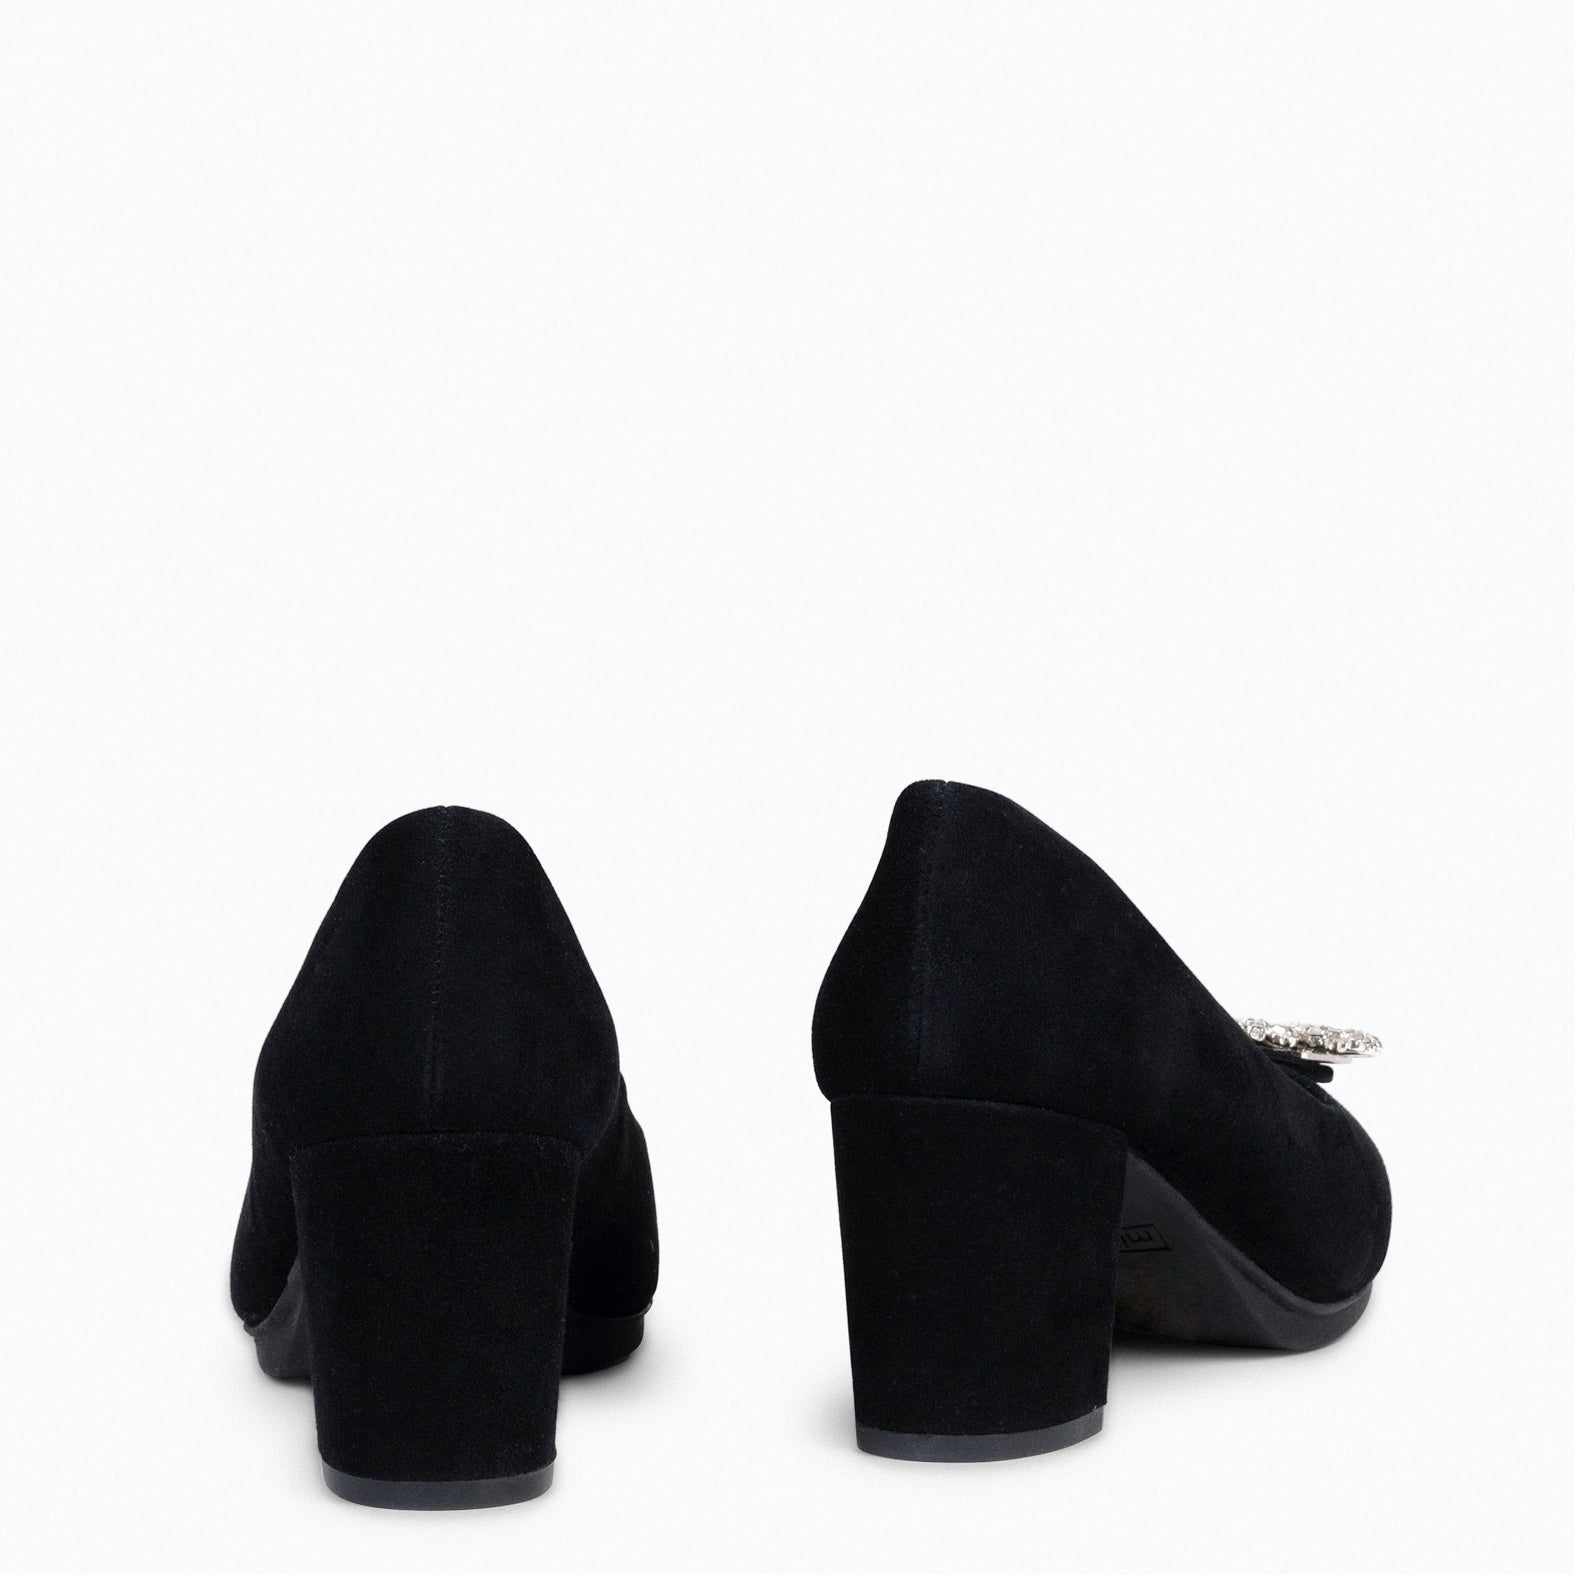 URBAN S CRYSTAL - BLACK mid heel with brooch